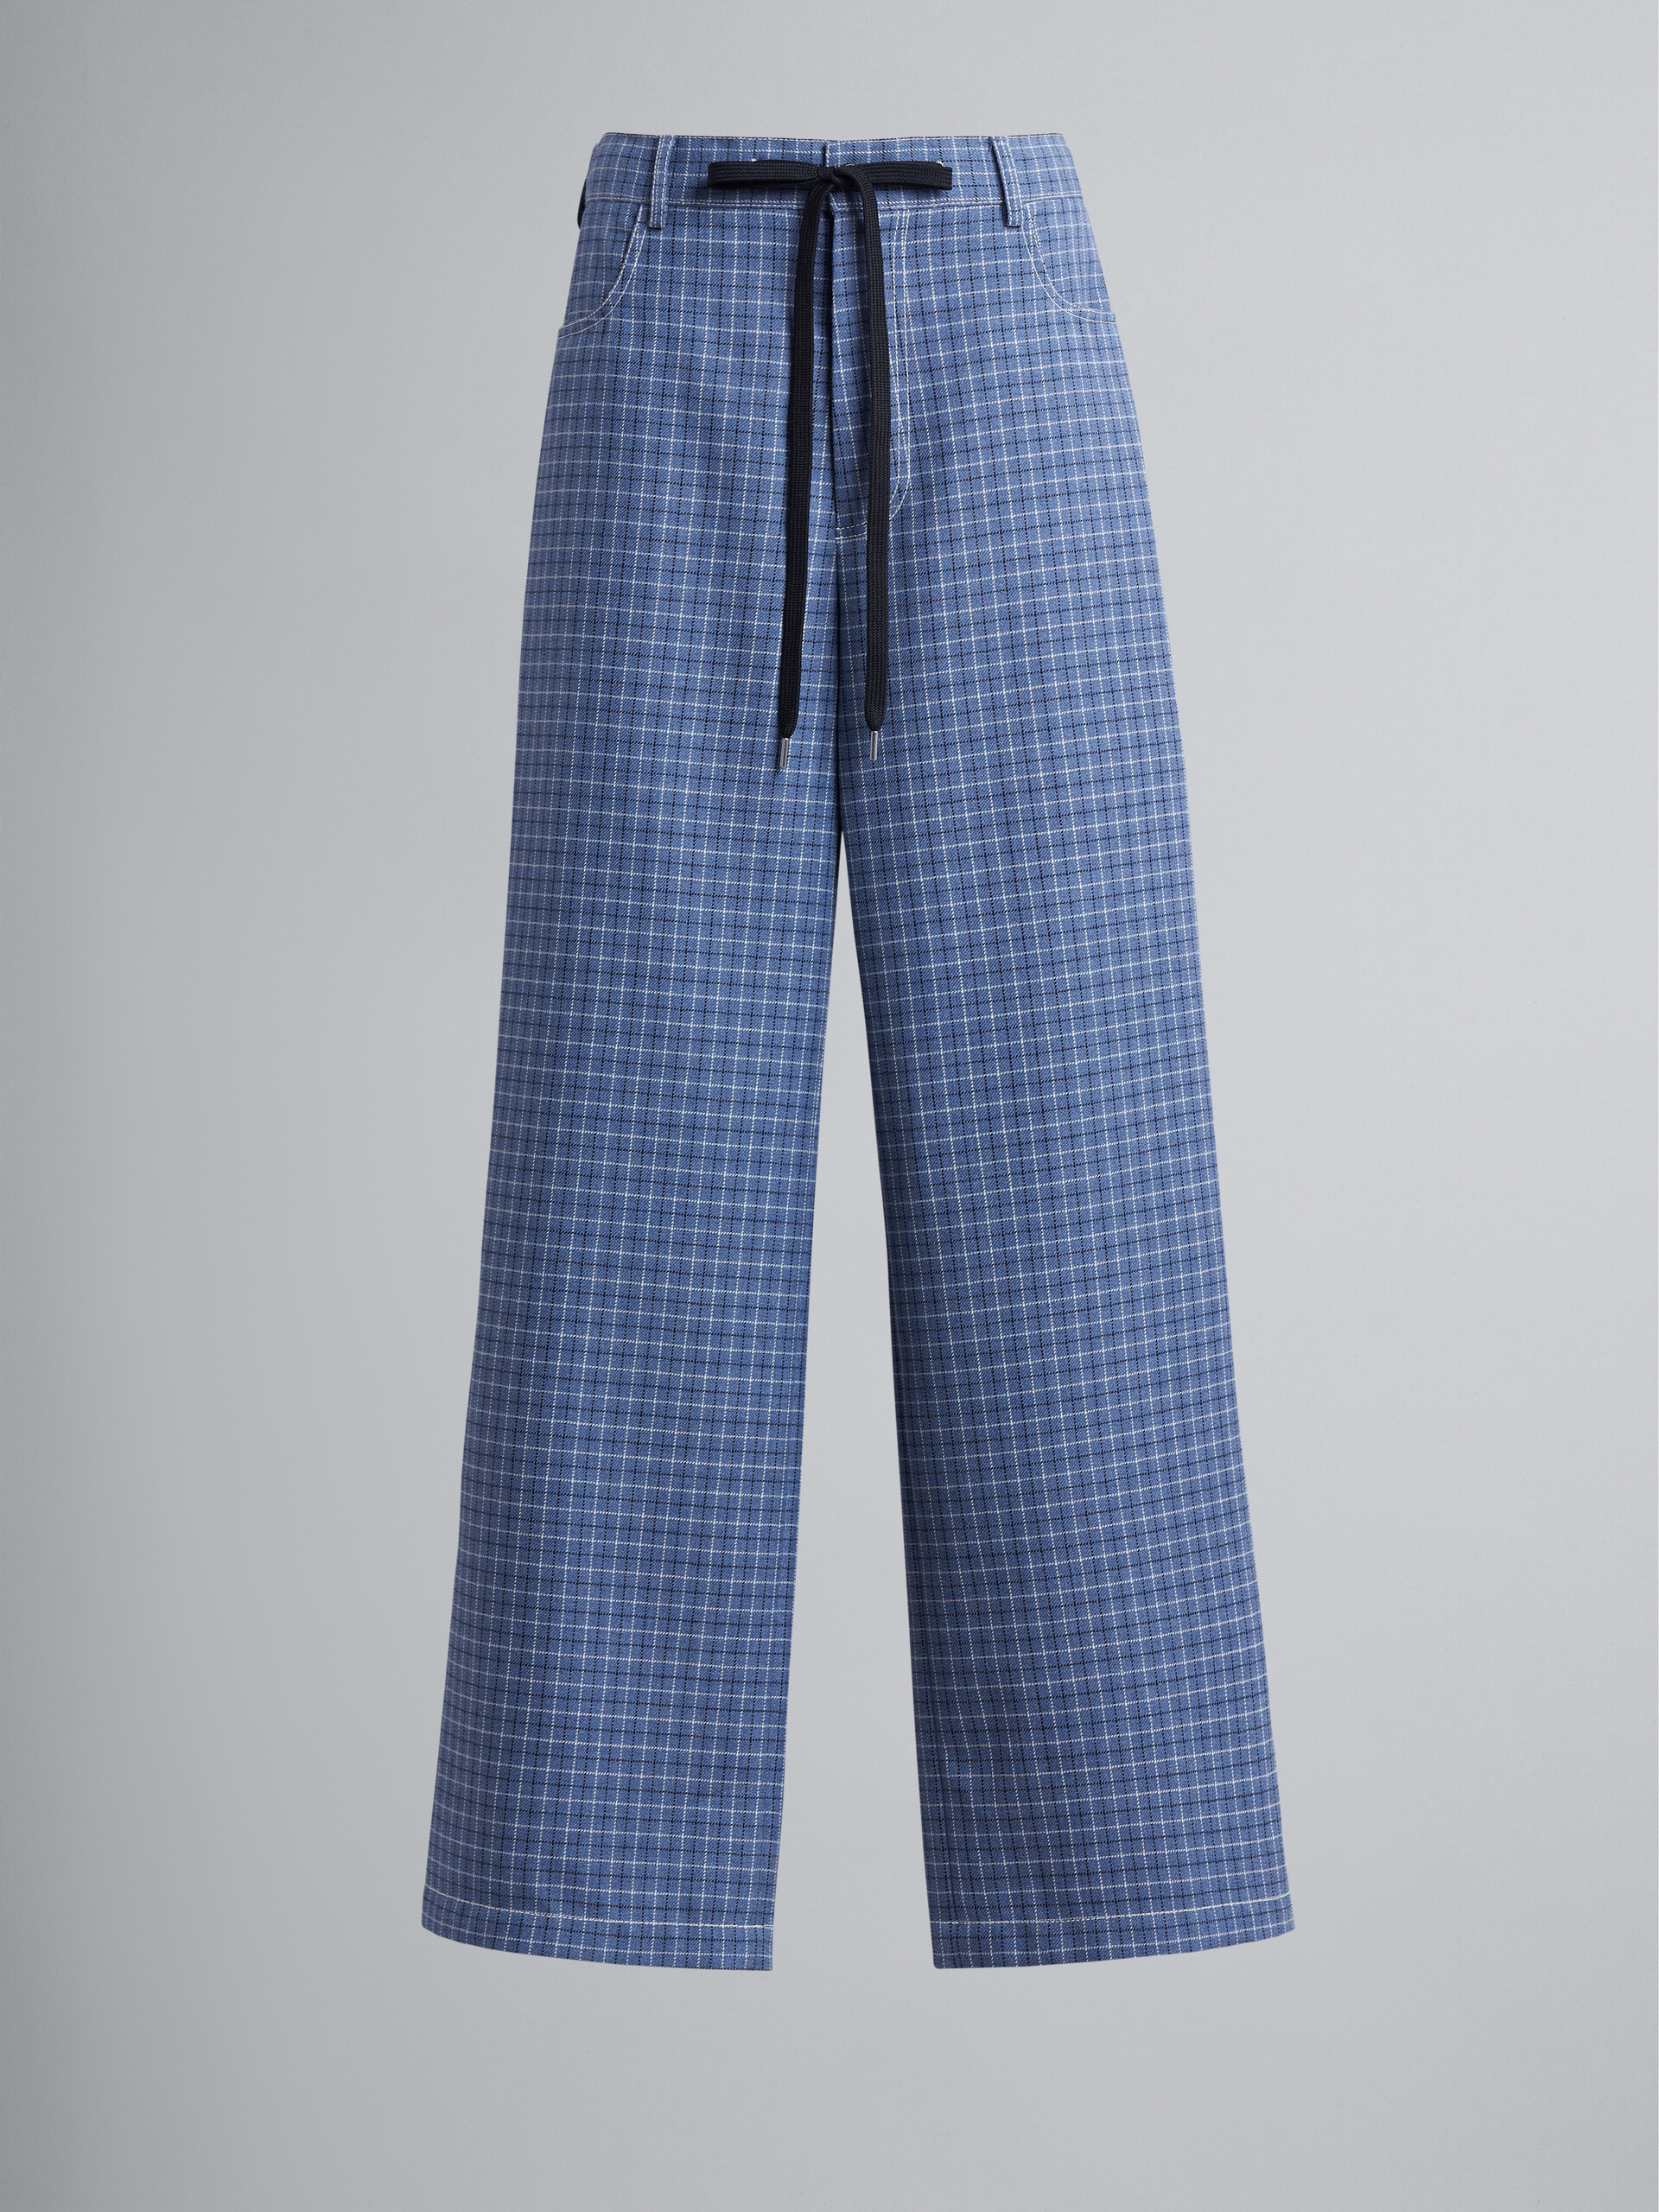 Pantaloni in lana check - Pantaloni - Image 1